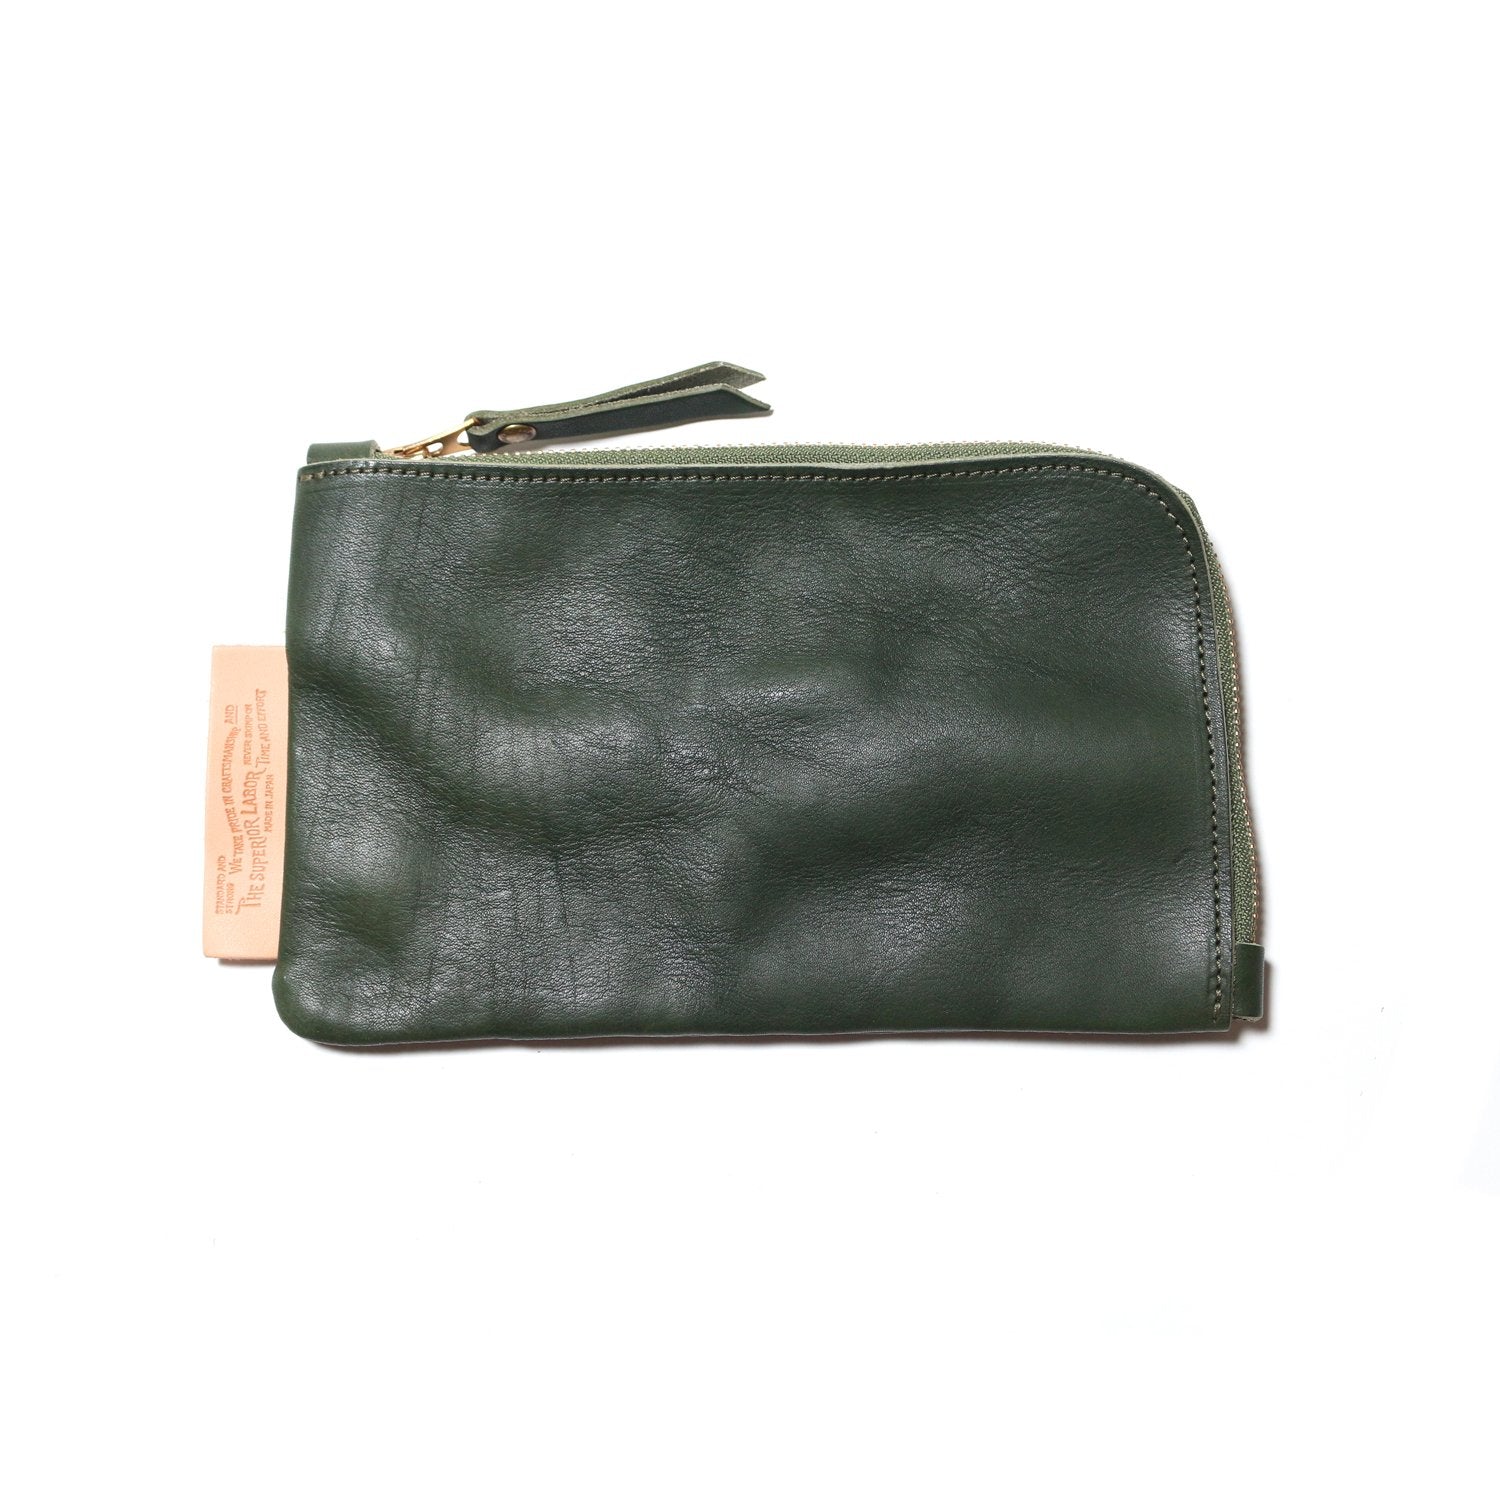 BG0021 utility leather pouch